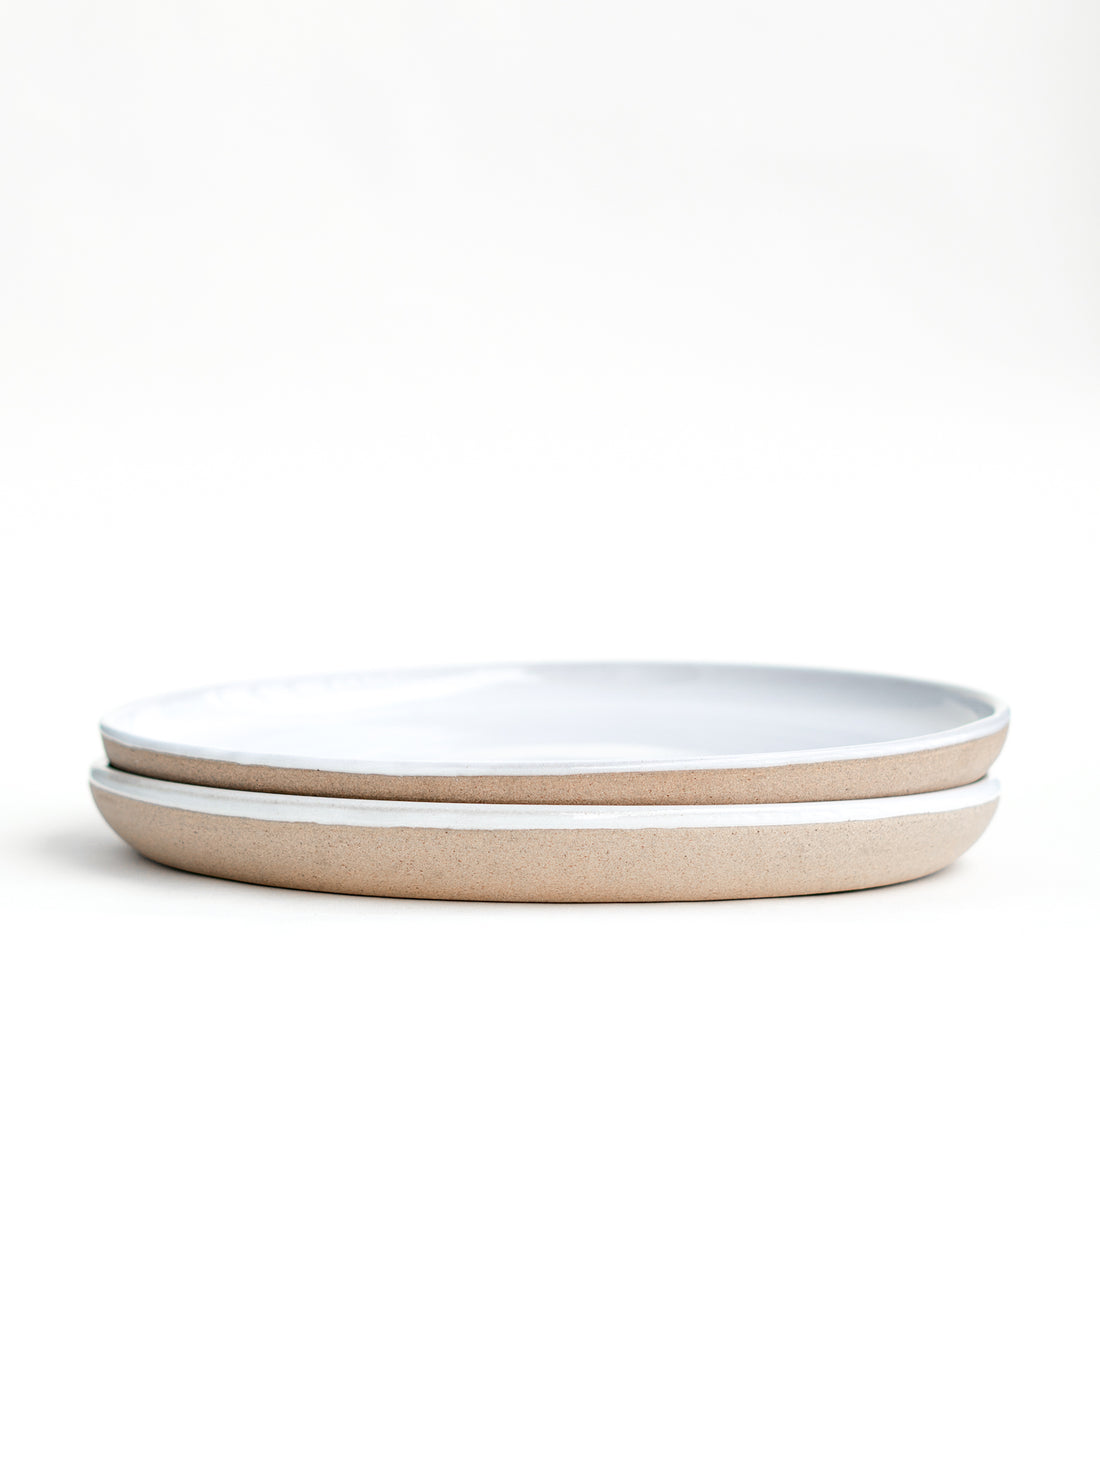 Snowdrop White Ceramic Dinner Plates Set